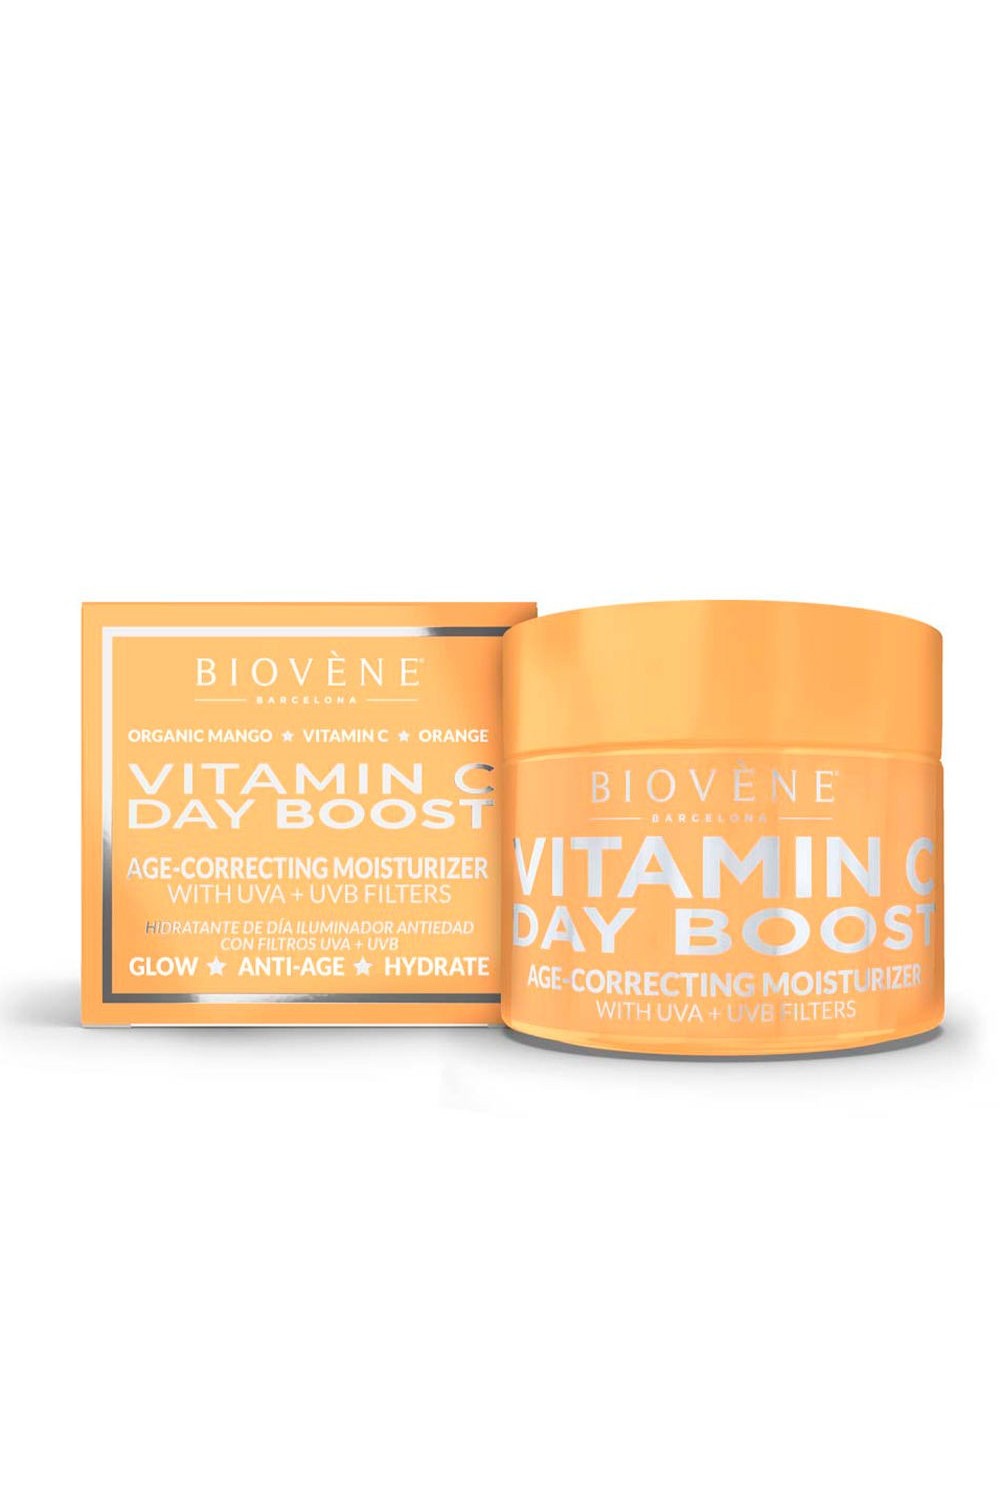 Biovene Vitamin C Day Boost Age-Correcting Moisturizer 50ml